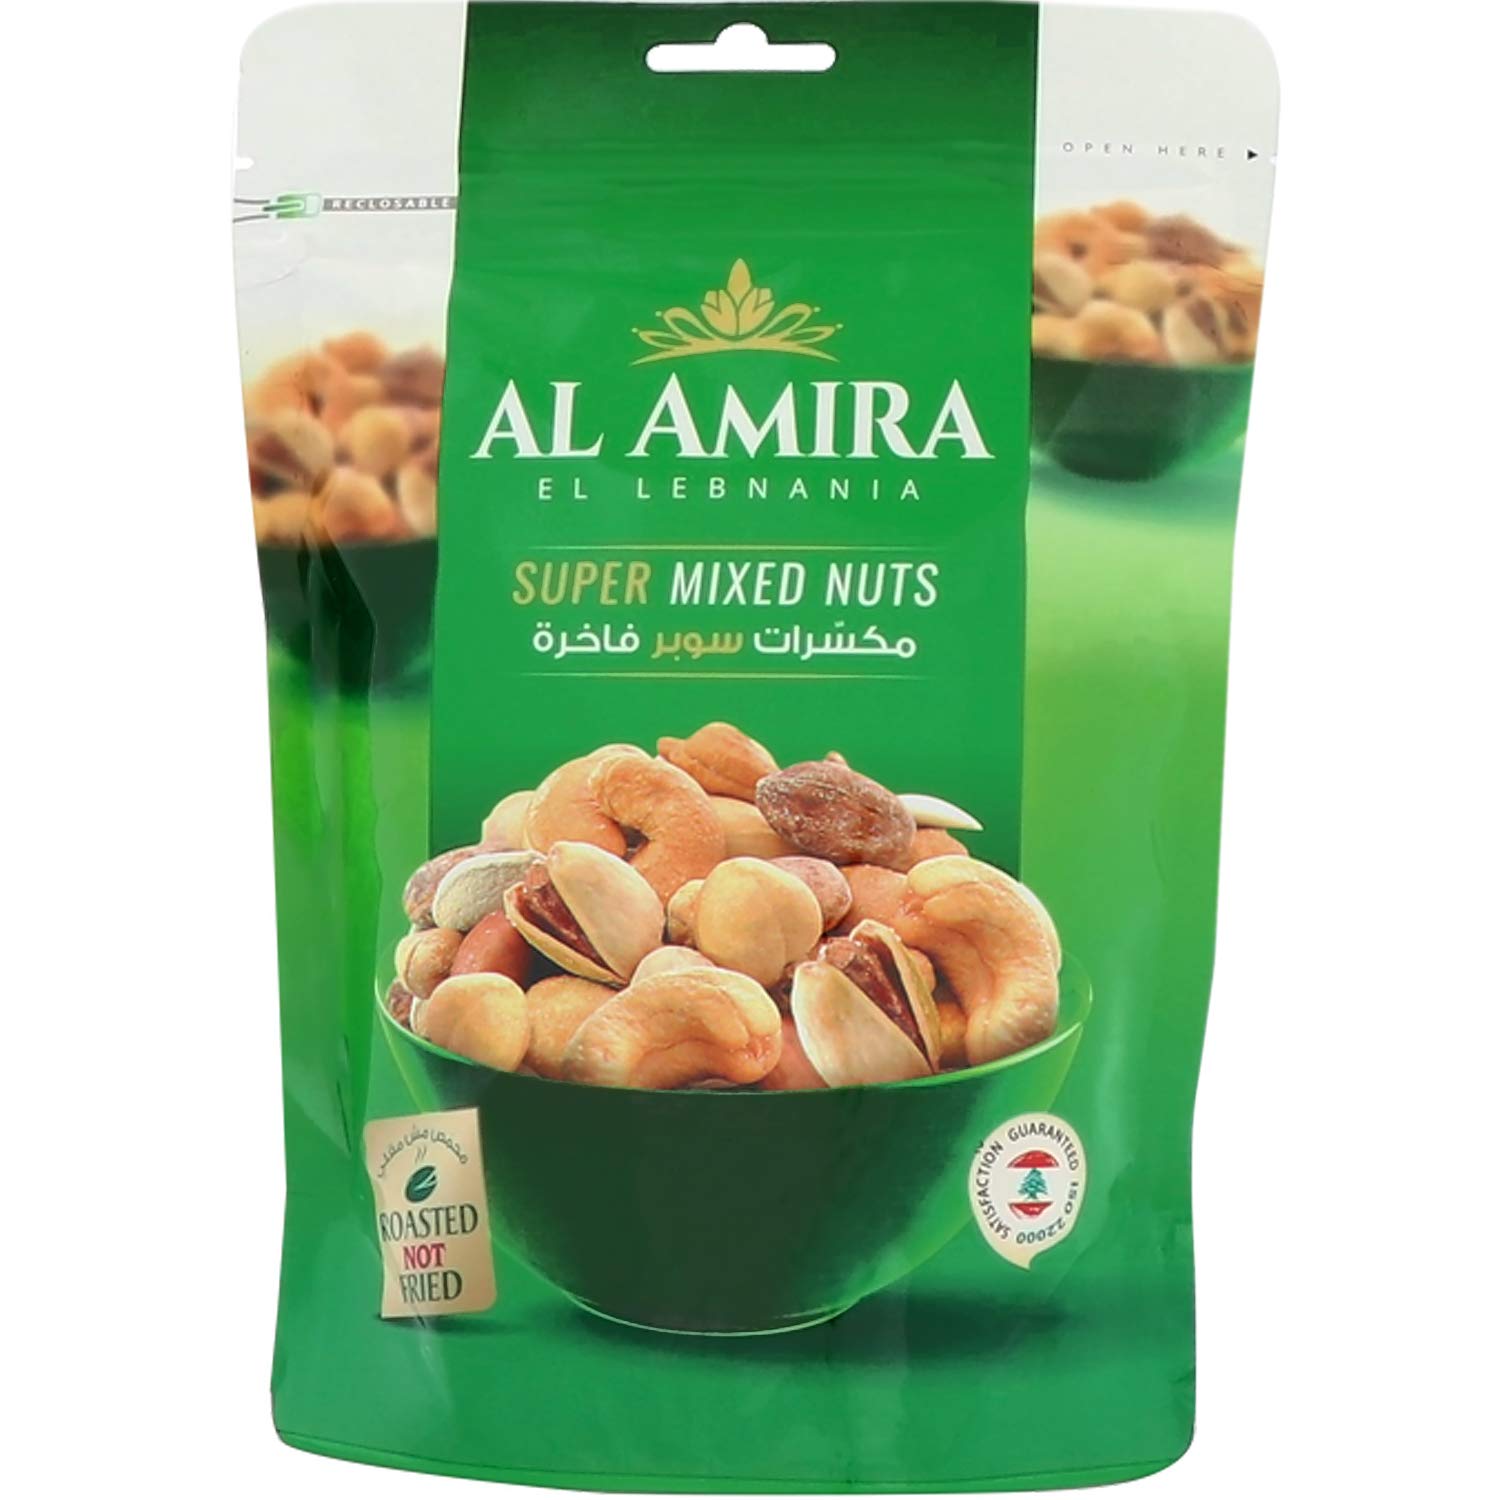 Al Amira - Mixed Nuts Combo (Regular, Super, Deluxe), 300g x 3 - image 2 of 5